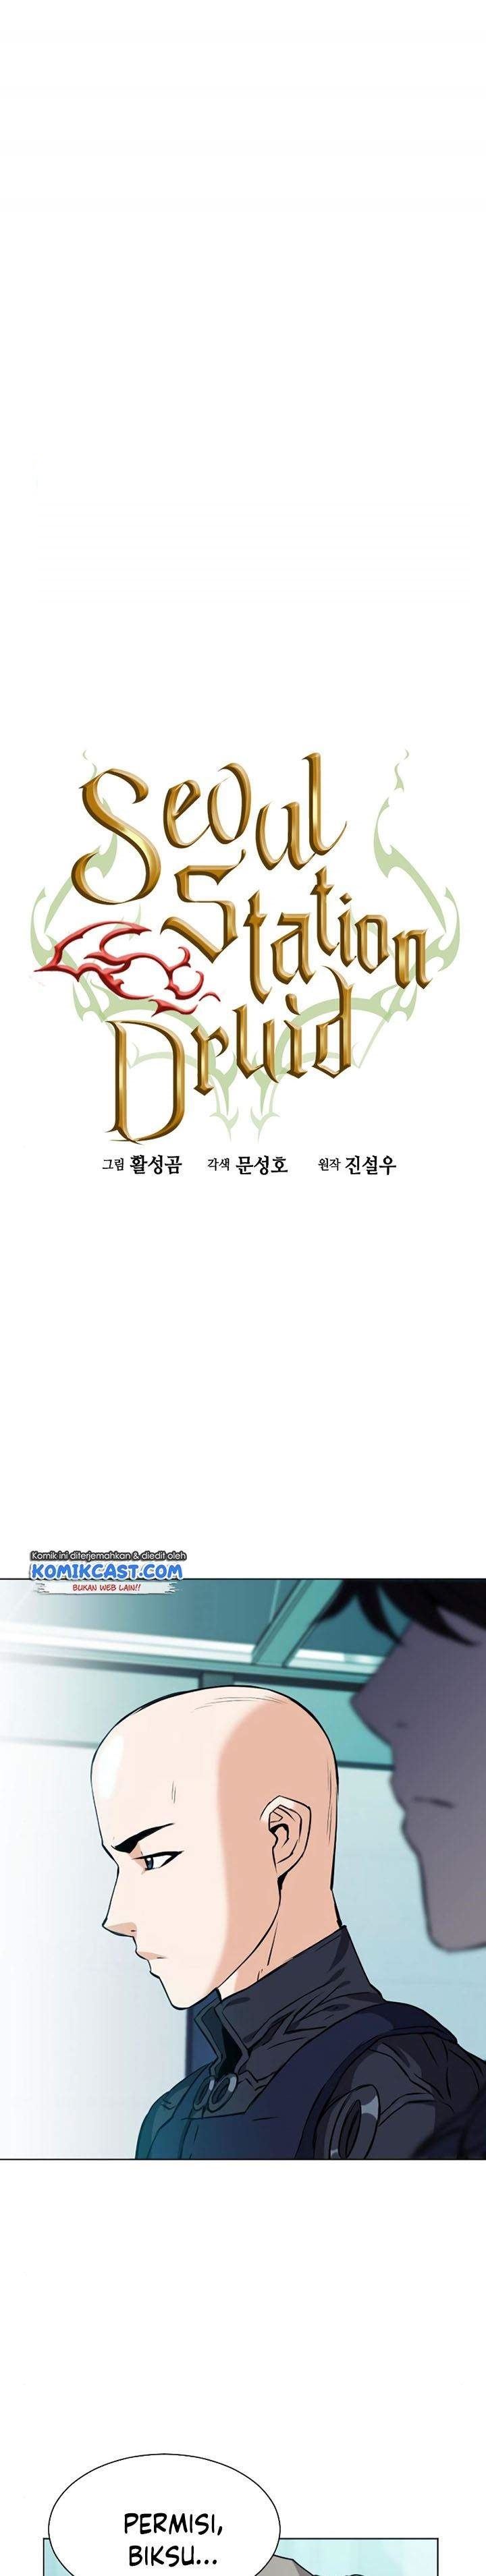 Seoul Station Druid Chapter 18